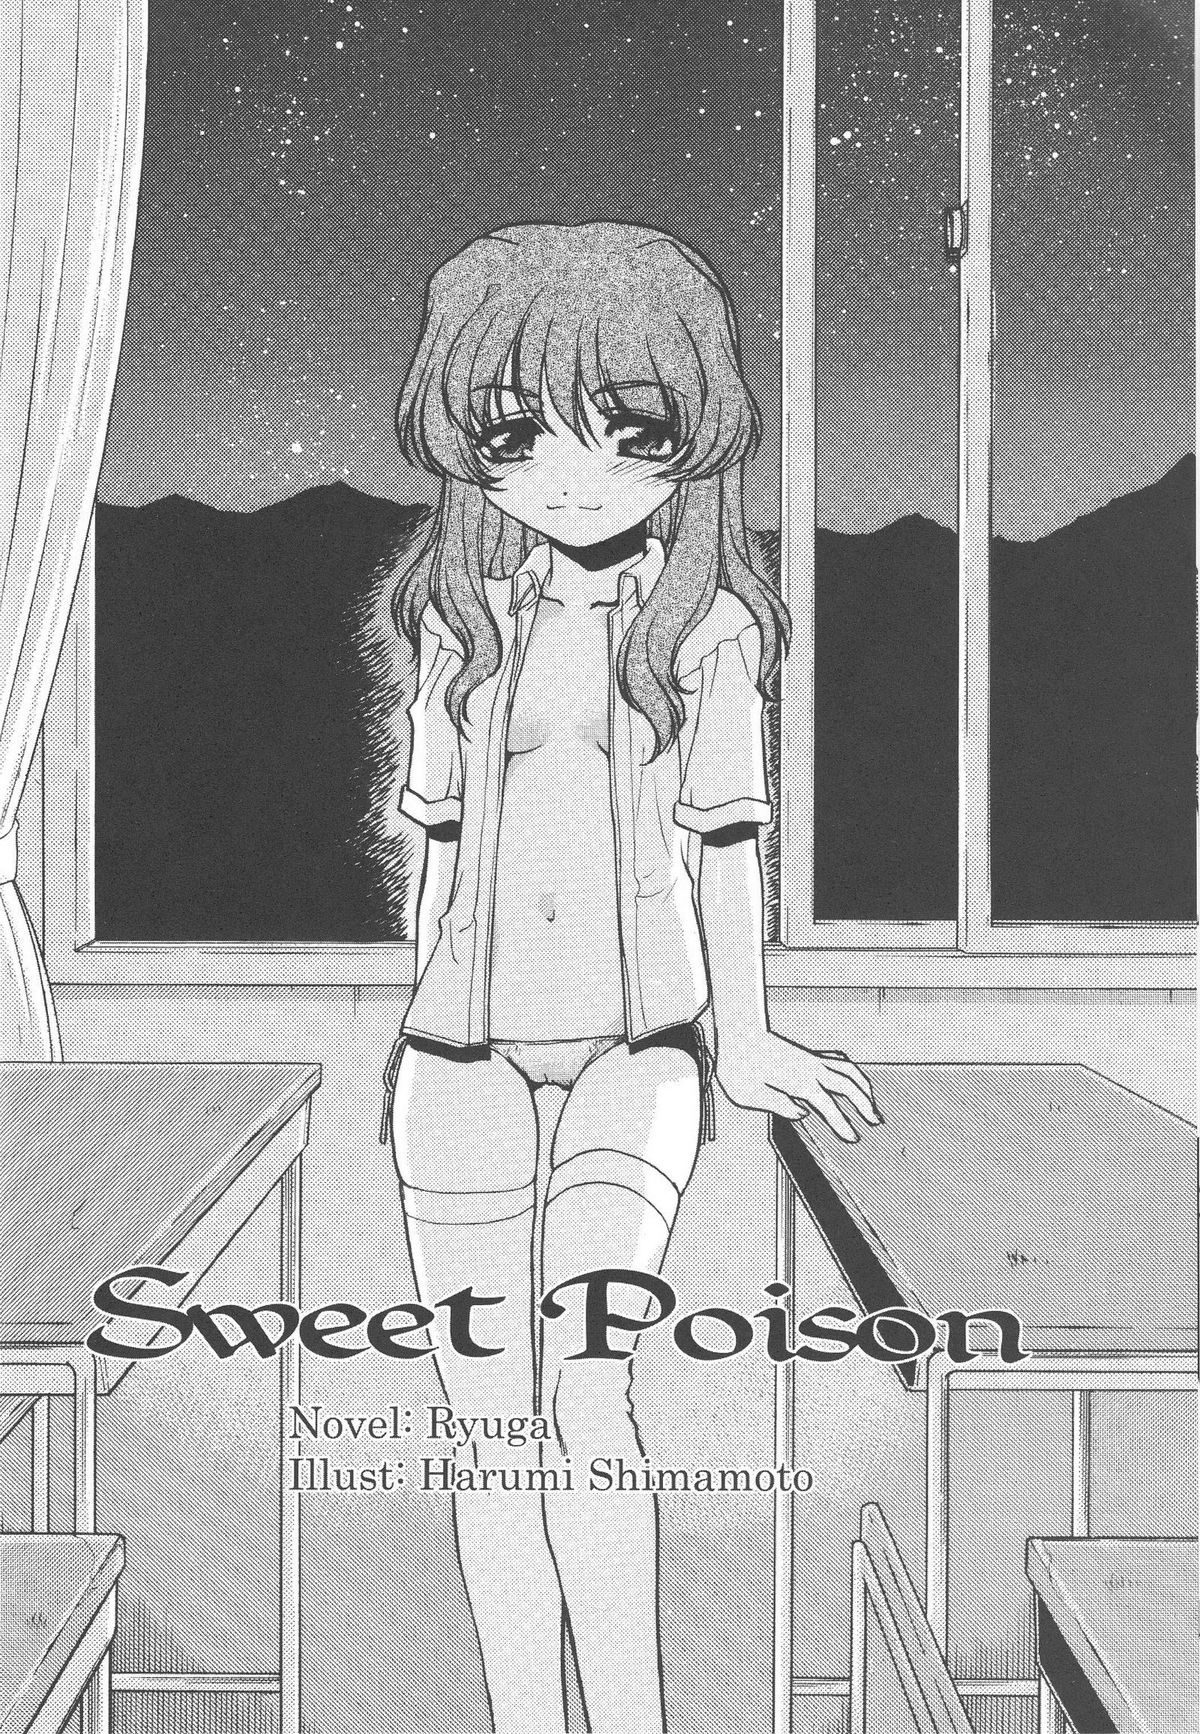 (C66) [Doujin Hoops] Sweet Poison/ Bitter Honey (おねがい☆ティーチャー, おねがい☆ツインズ)